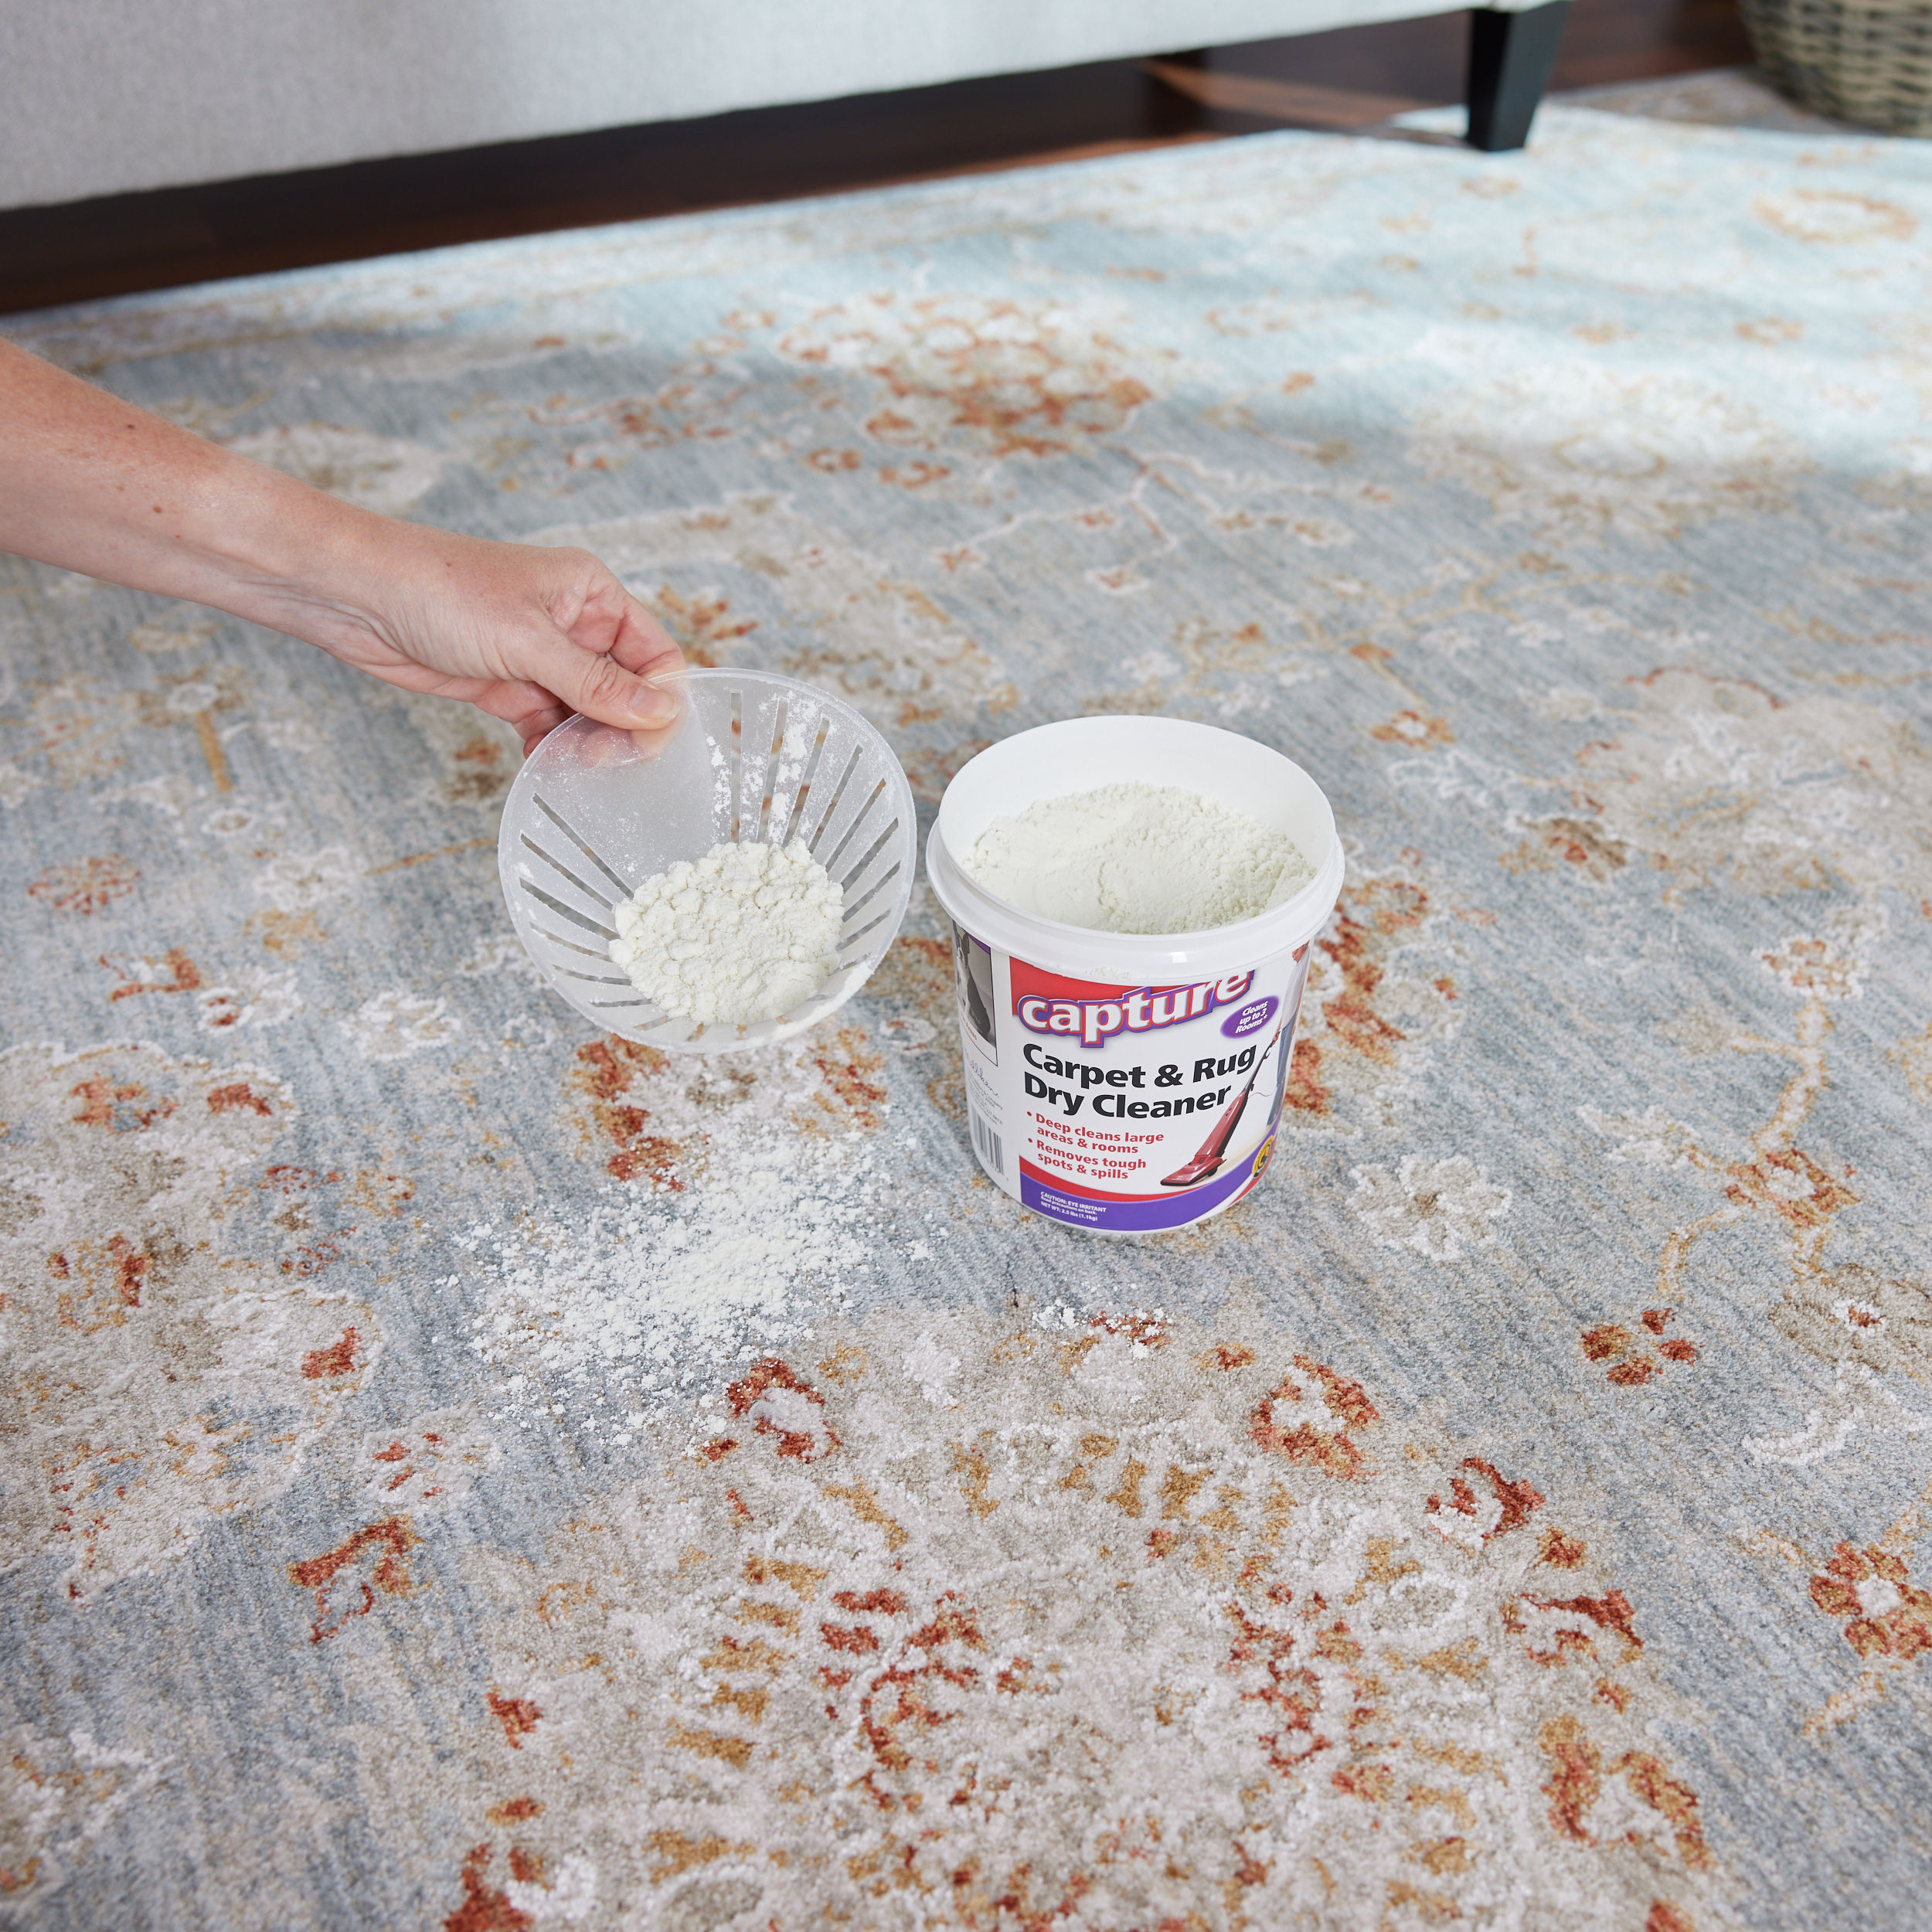 Capture Carpet & Rug Dry Cleaner w/ Brush (1 lb.) 